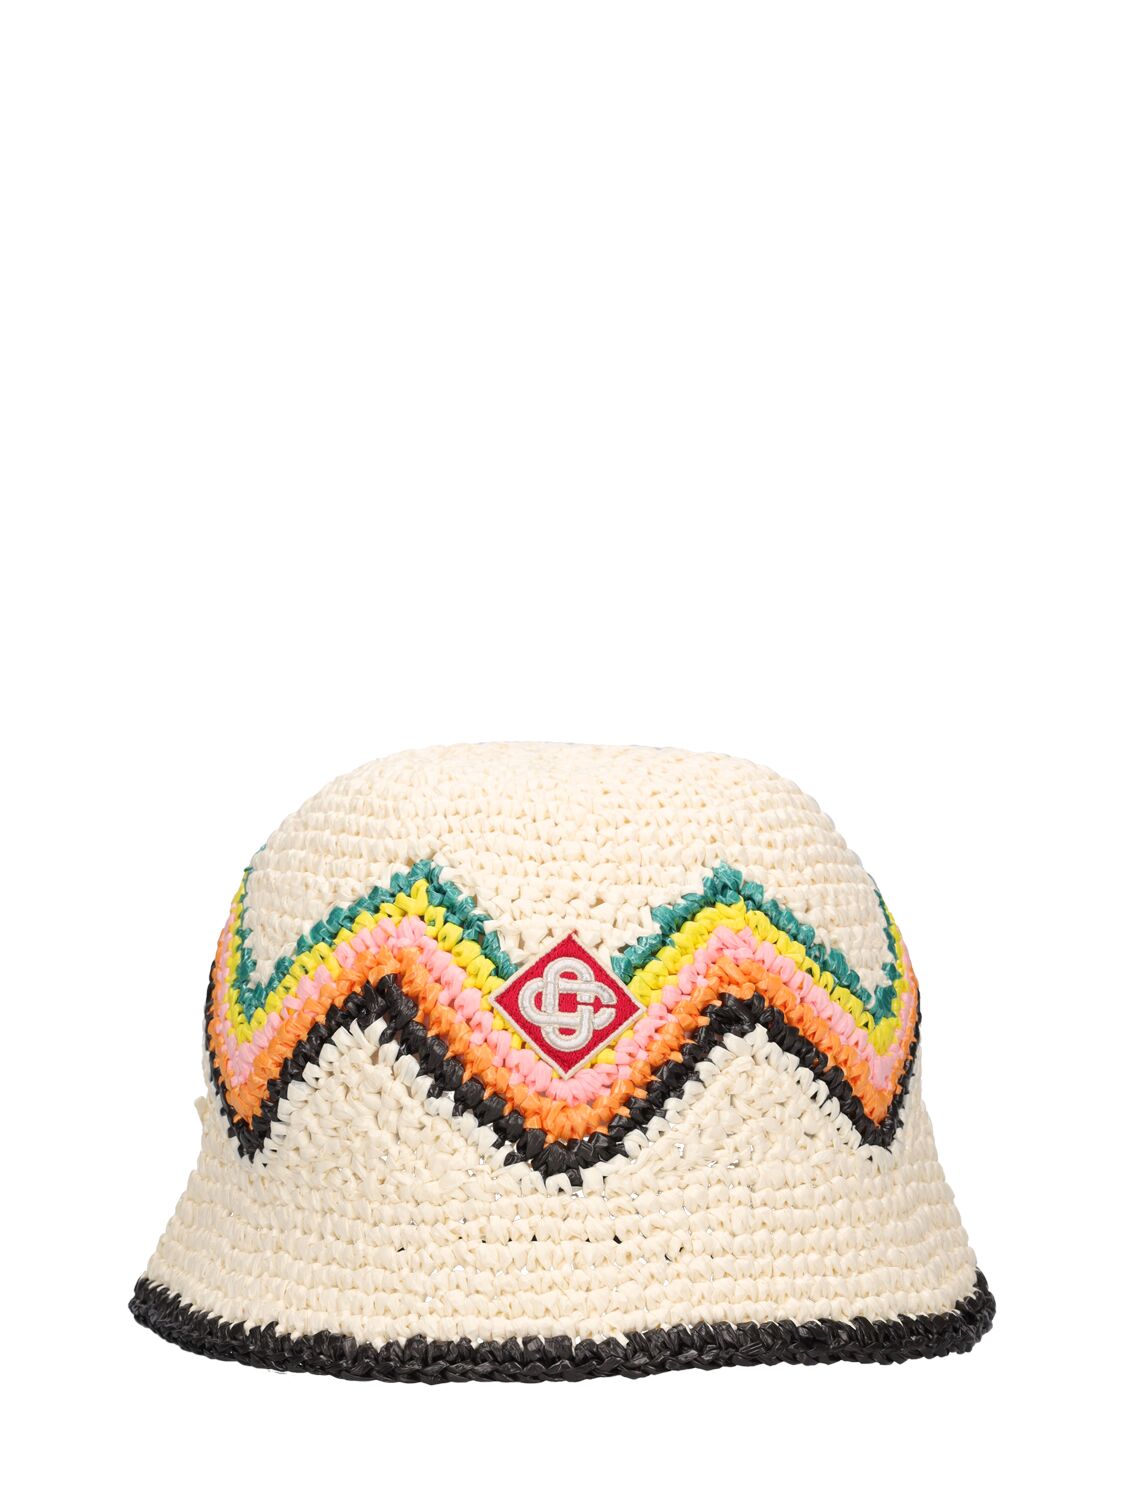 Image of Chevron Raffia Effect Crochet Hat